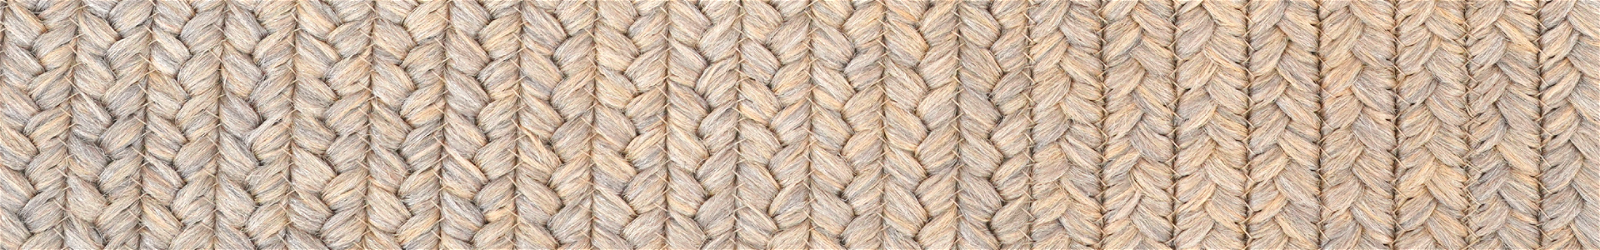 10 x 10 - Brown Braided Rugs